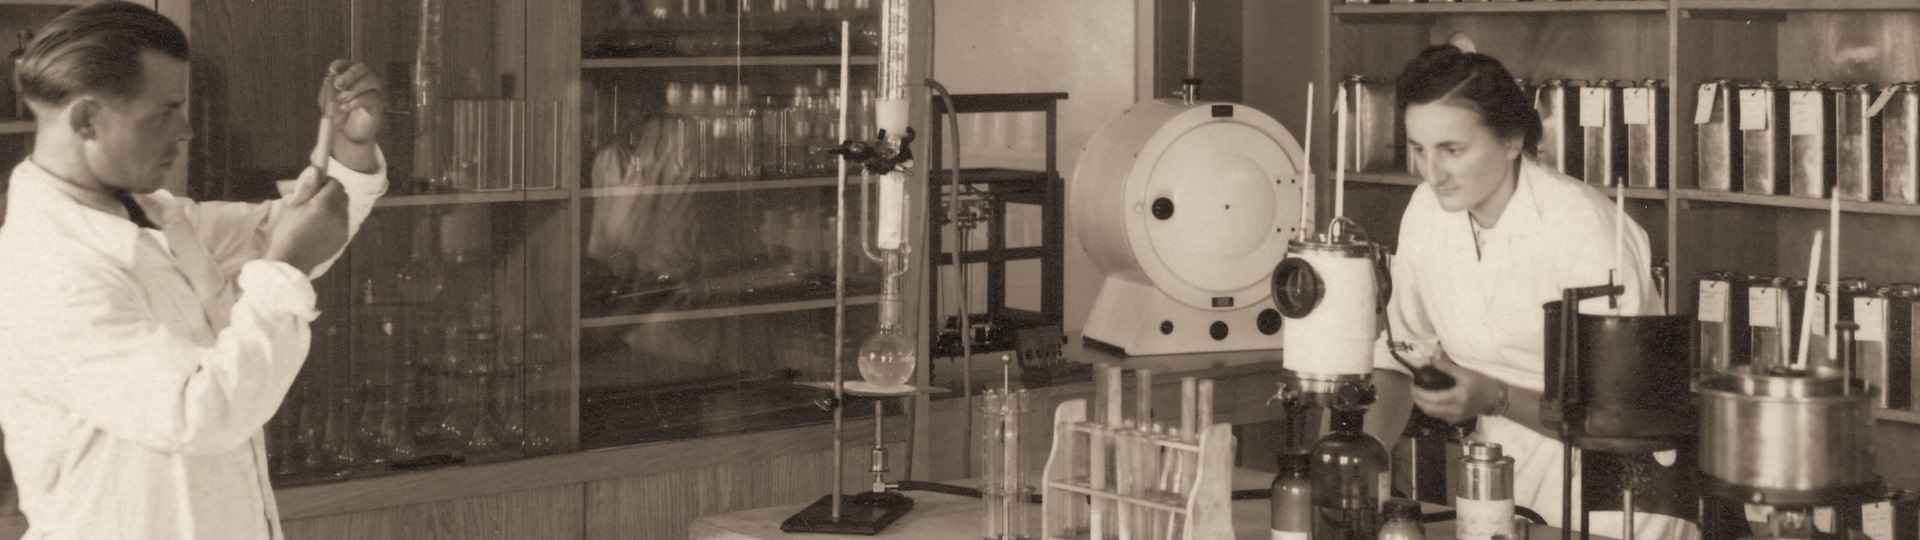 FUCHS laboratory in earlier times